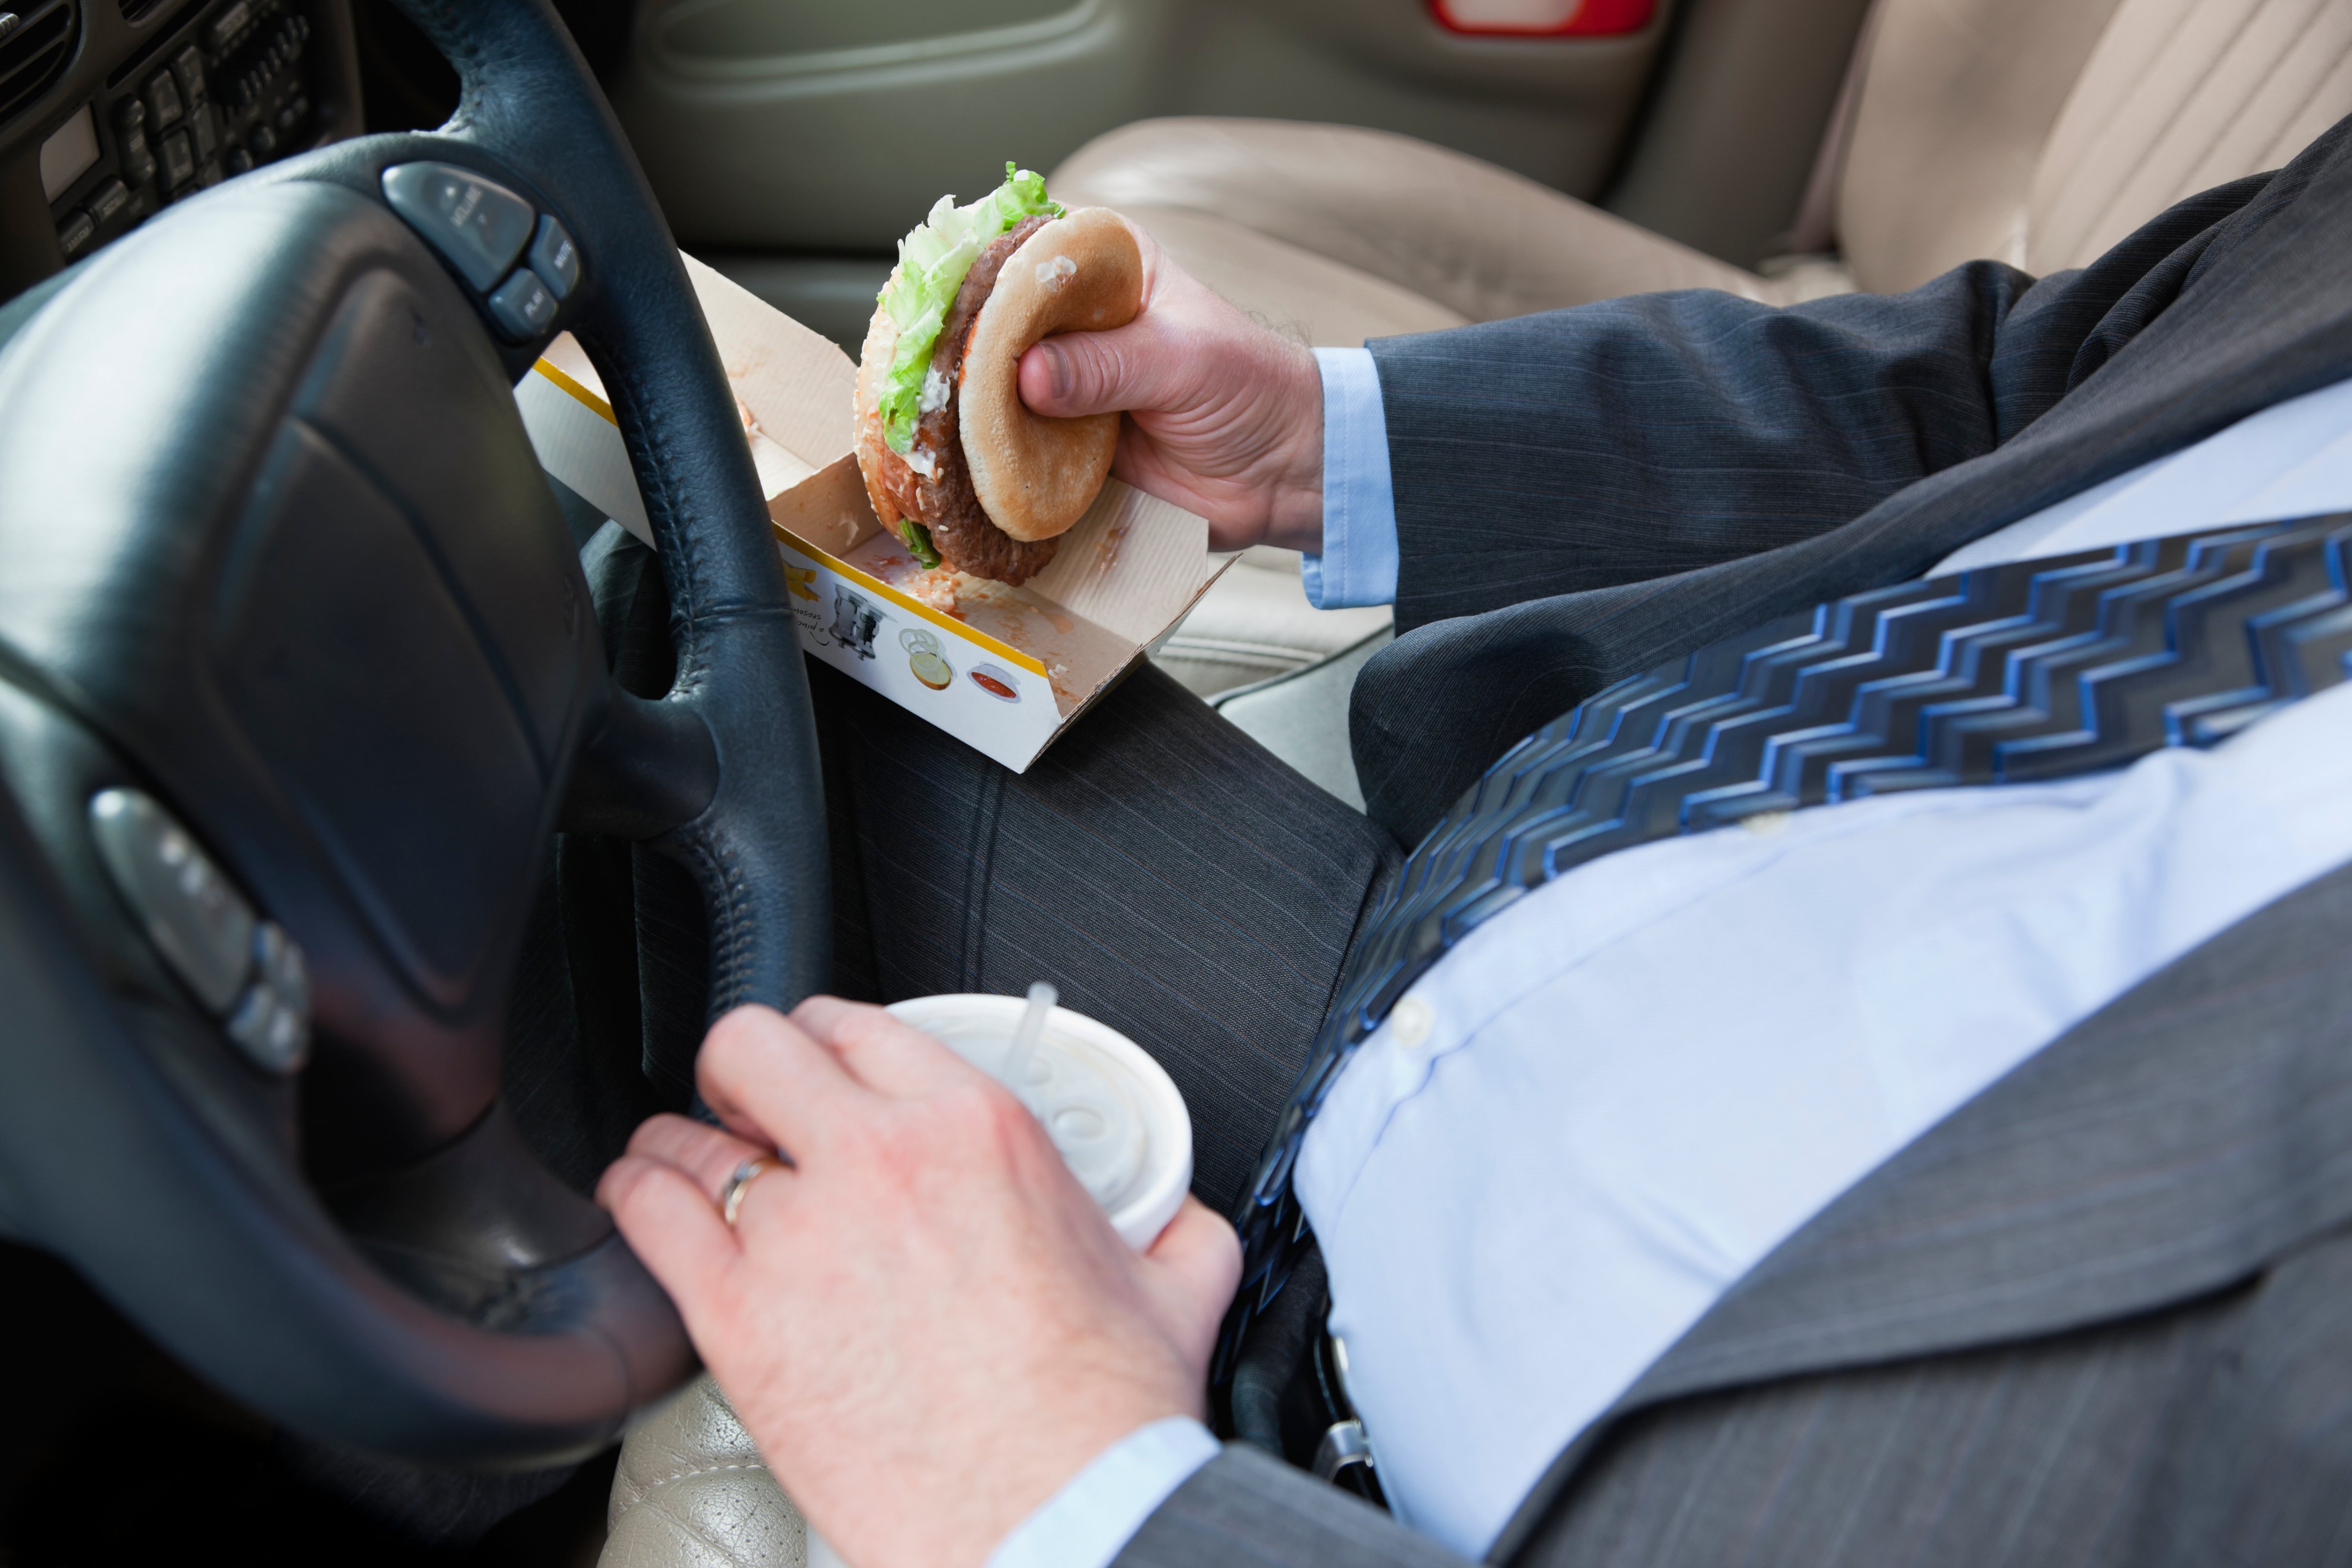 man driving a car, eating a burger